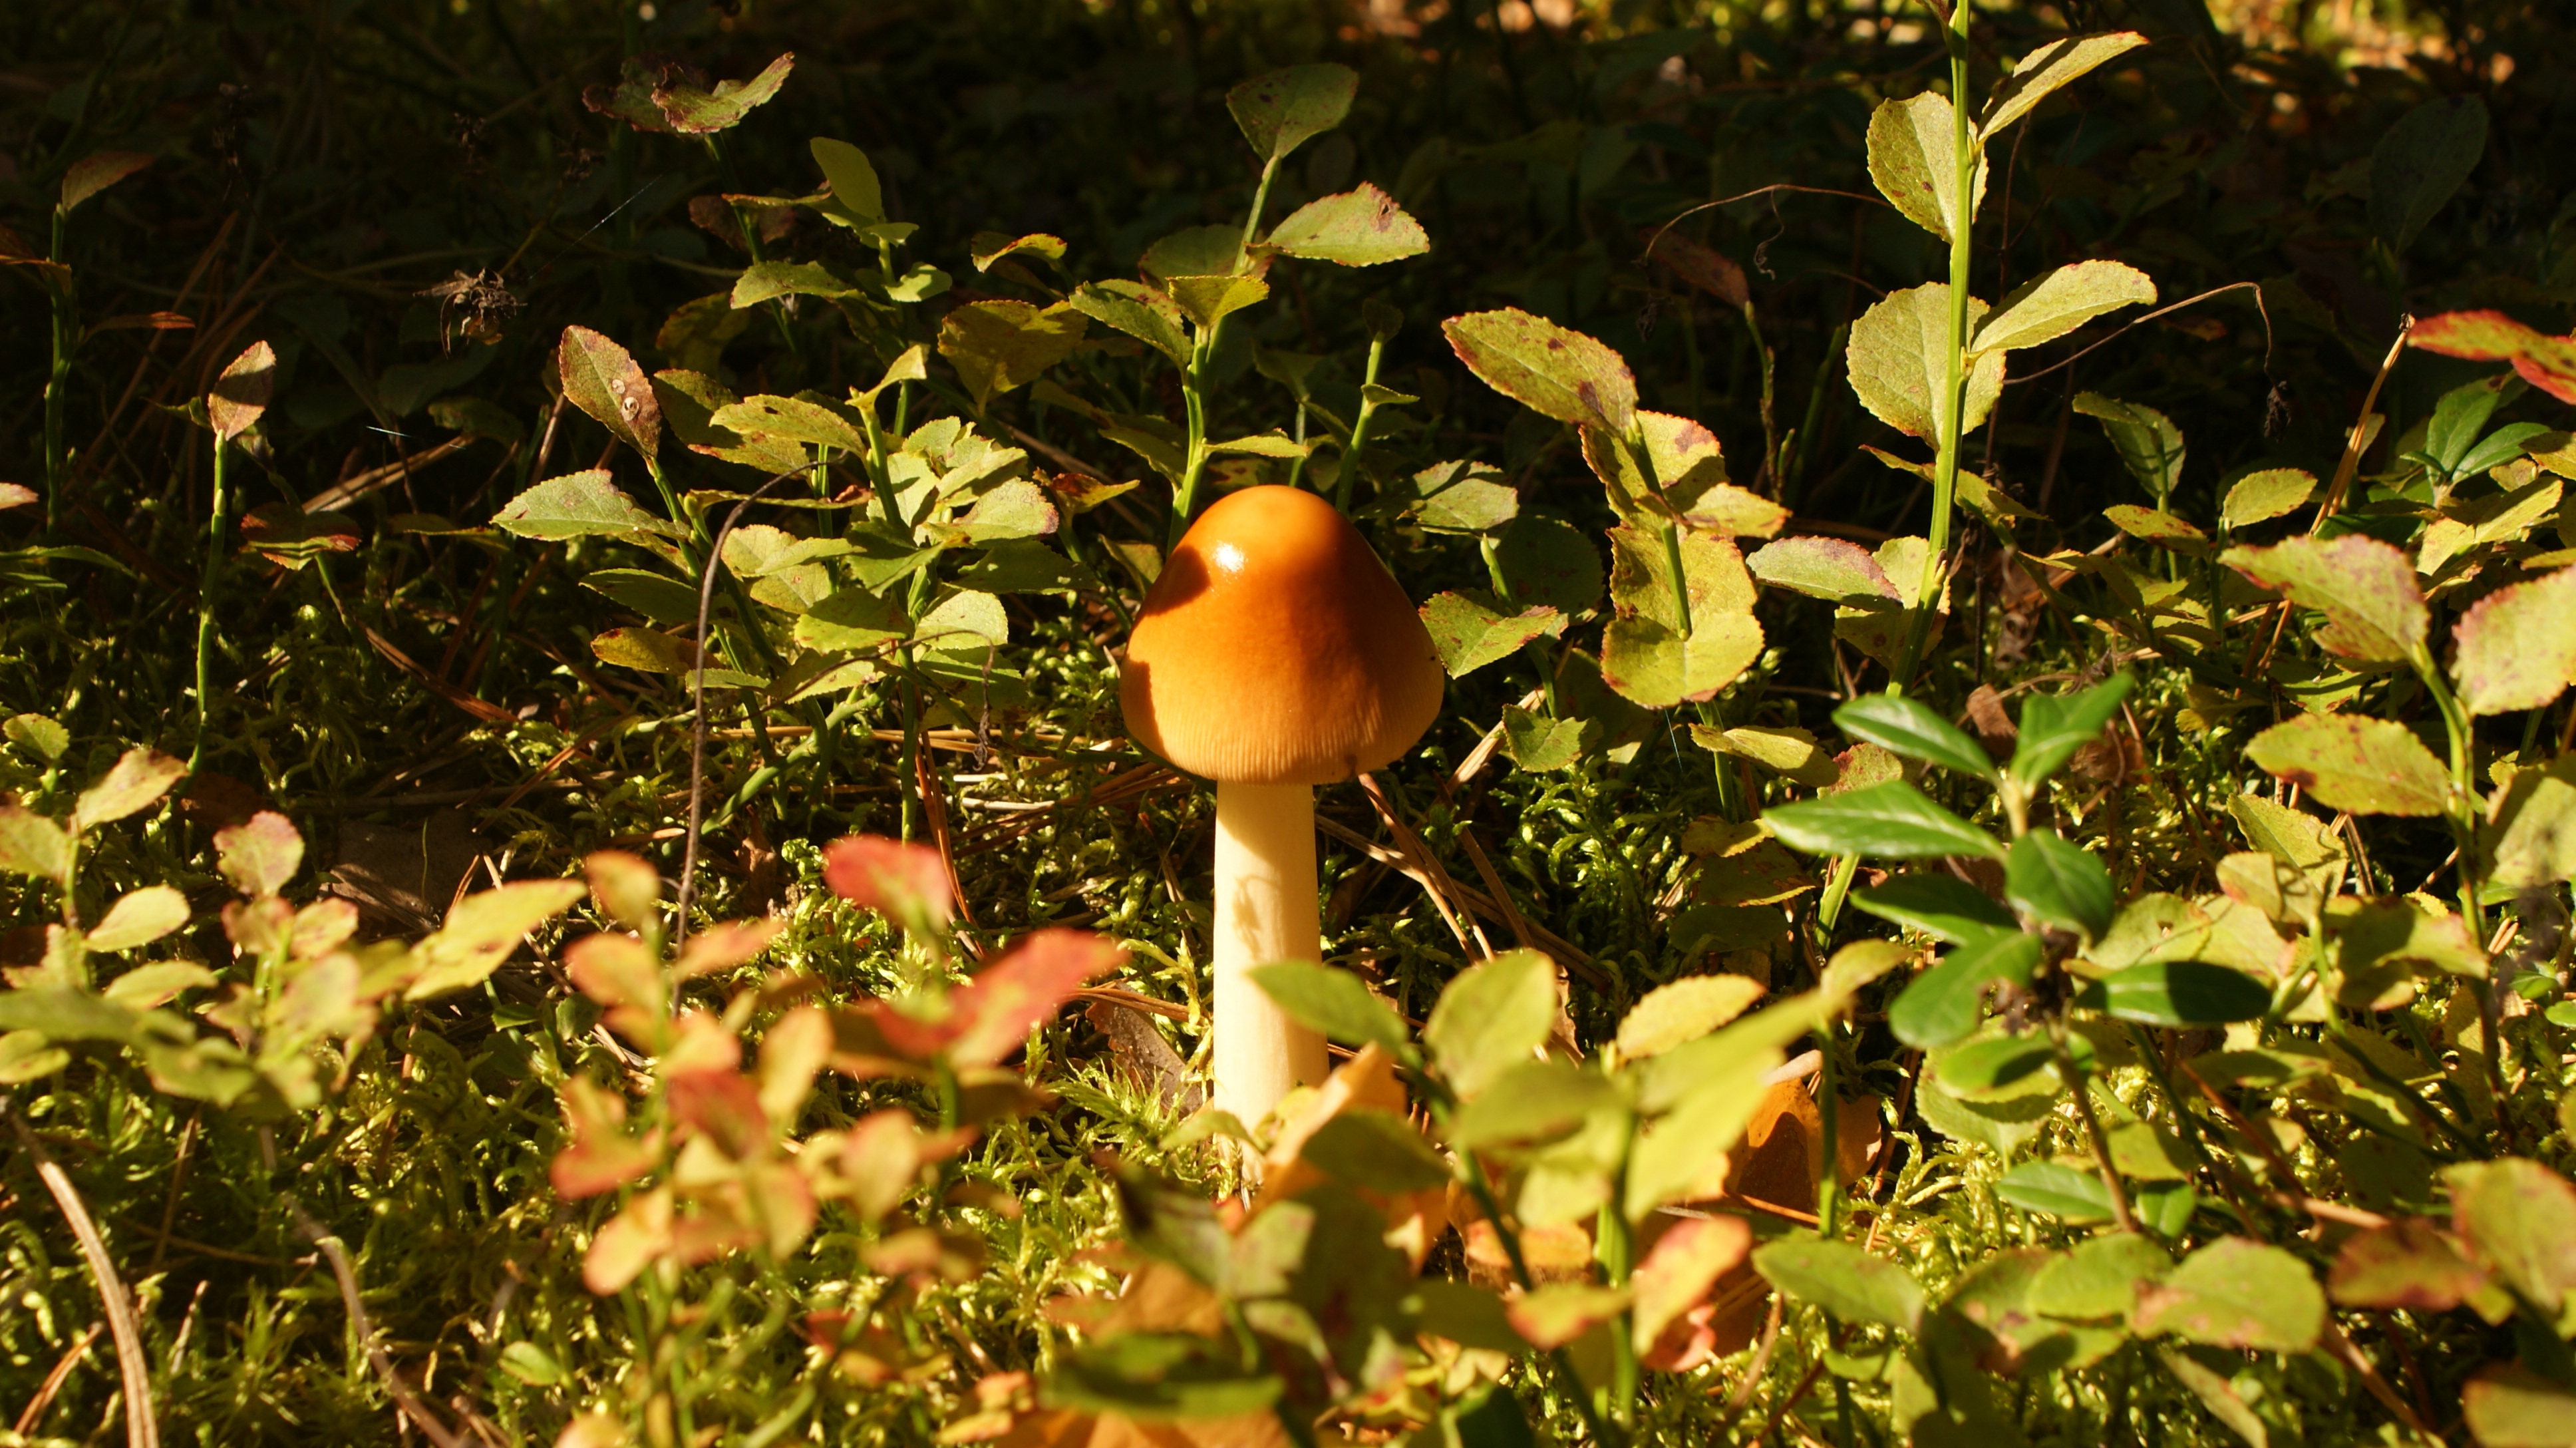 Mushroom 2, Autumn, Fall, Forest, Light, HQ Photo